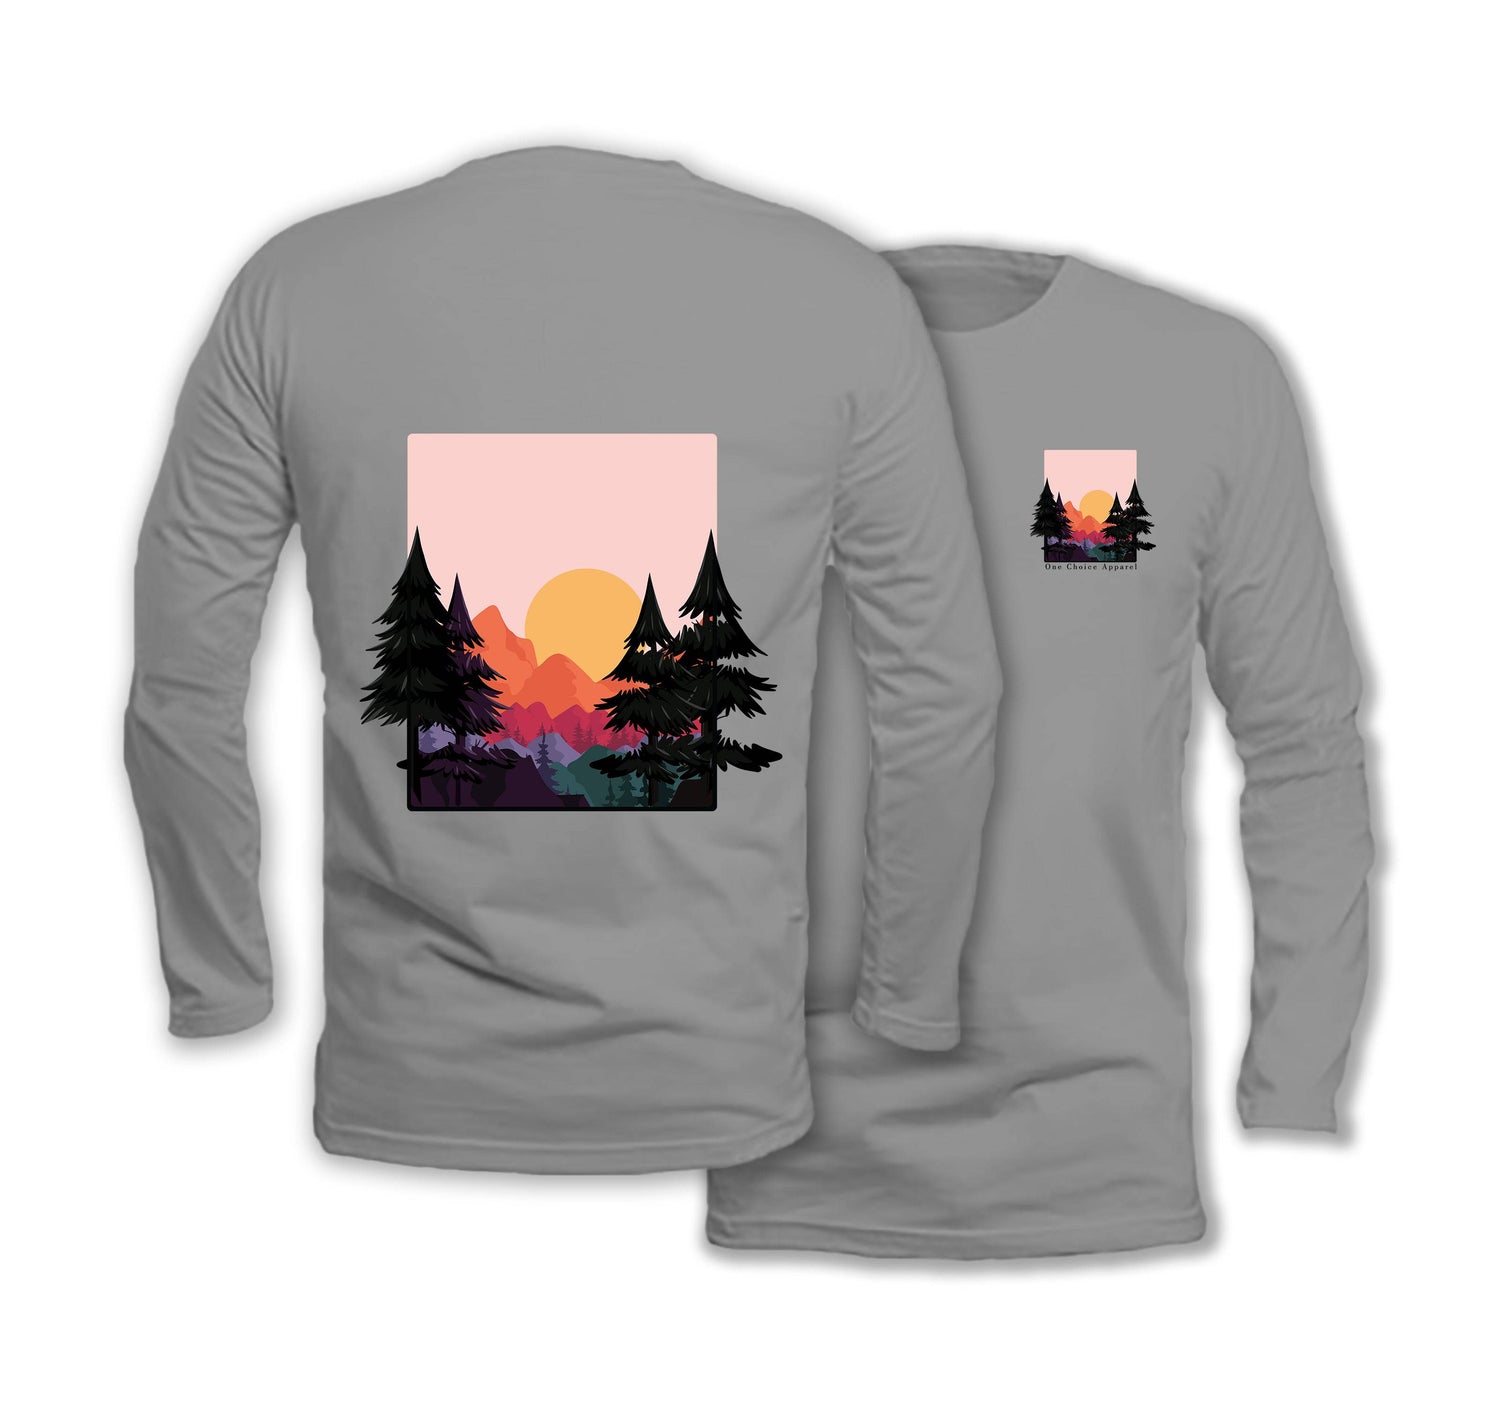 Sun & Mountains - Long Sleeve Organic Cotton T-Shirt - One Choice Apparel